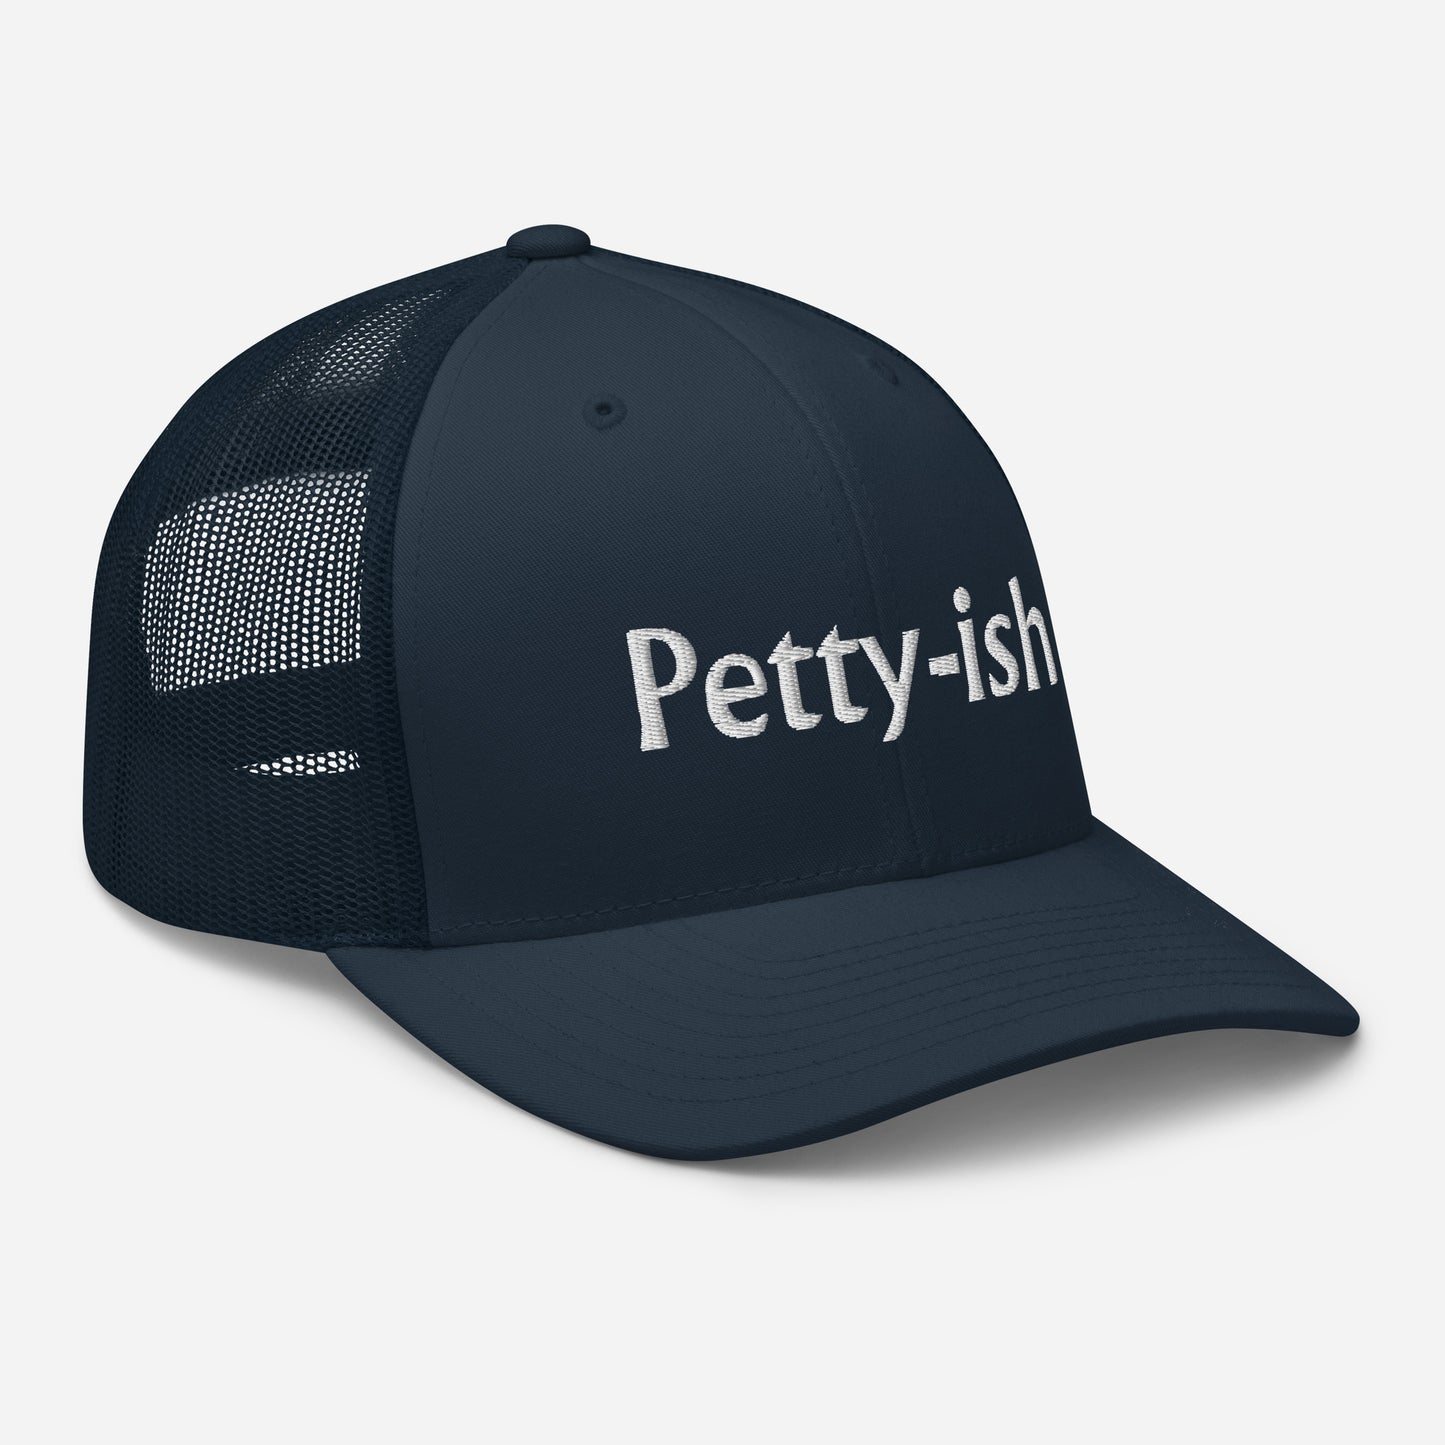 Petty-ish Trucker Cap